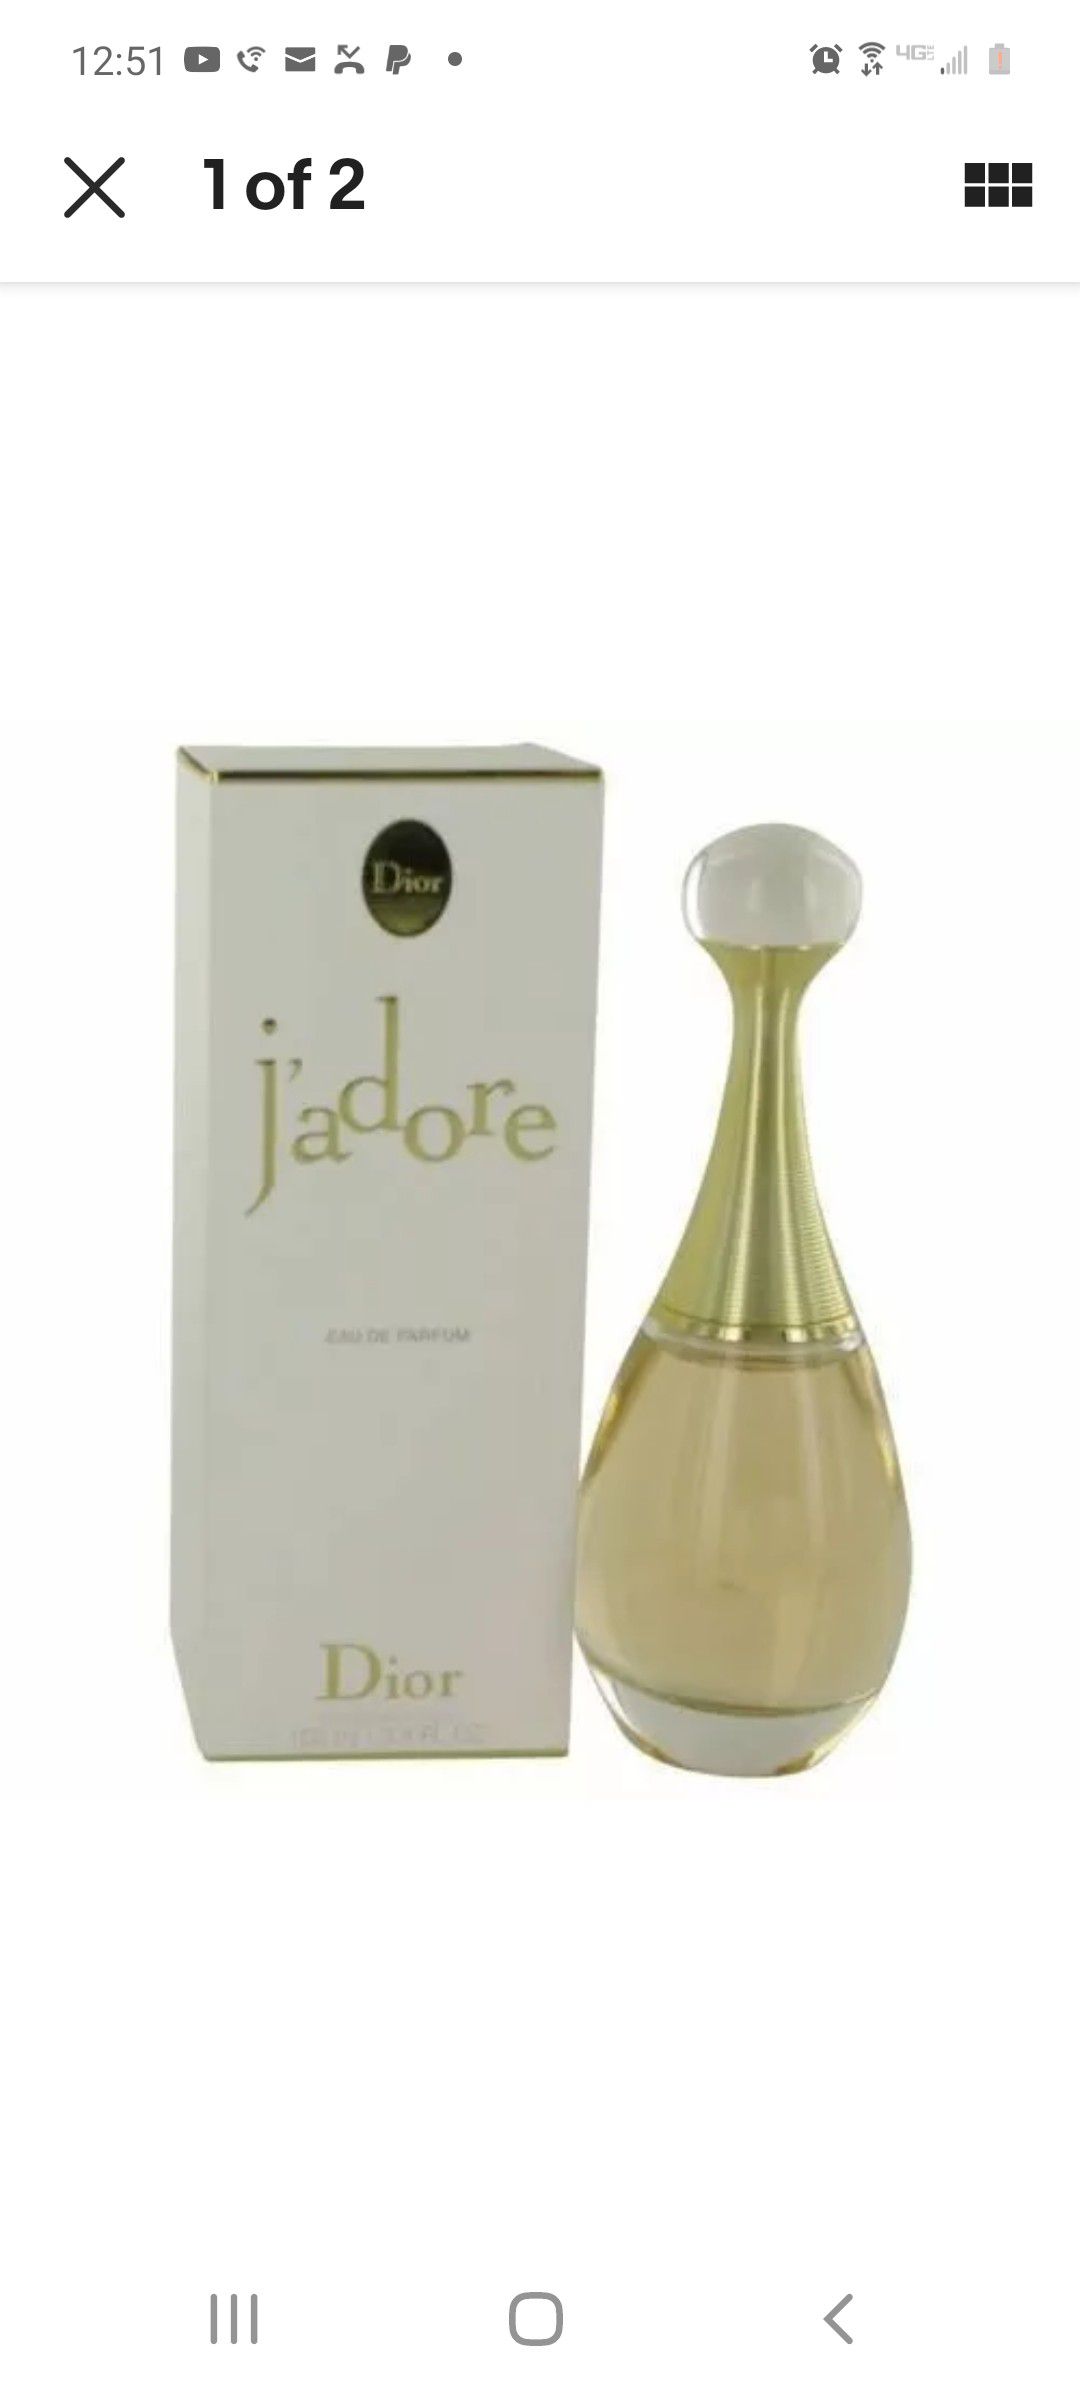 Jadore dior 3.4 oz Eau de parfum